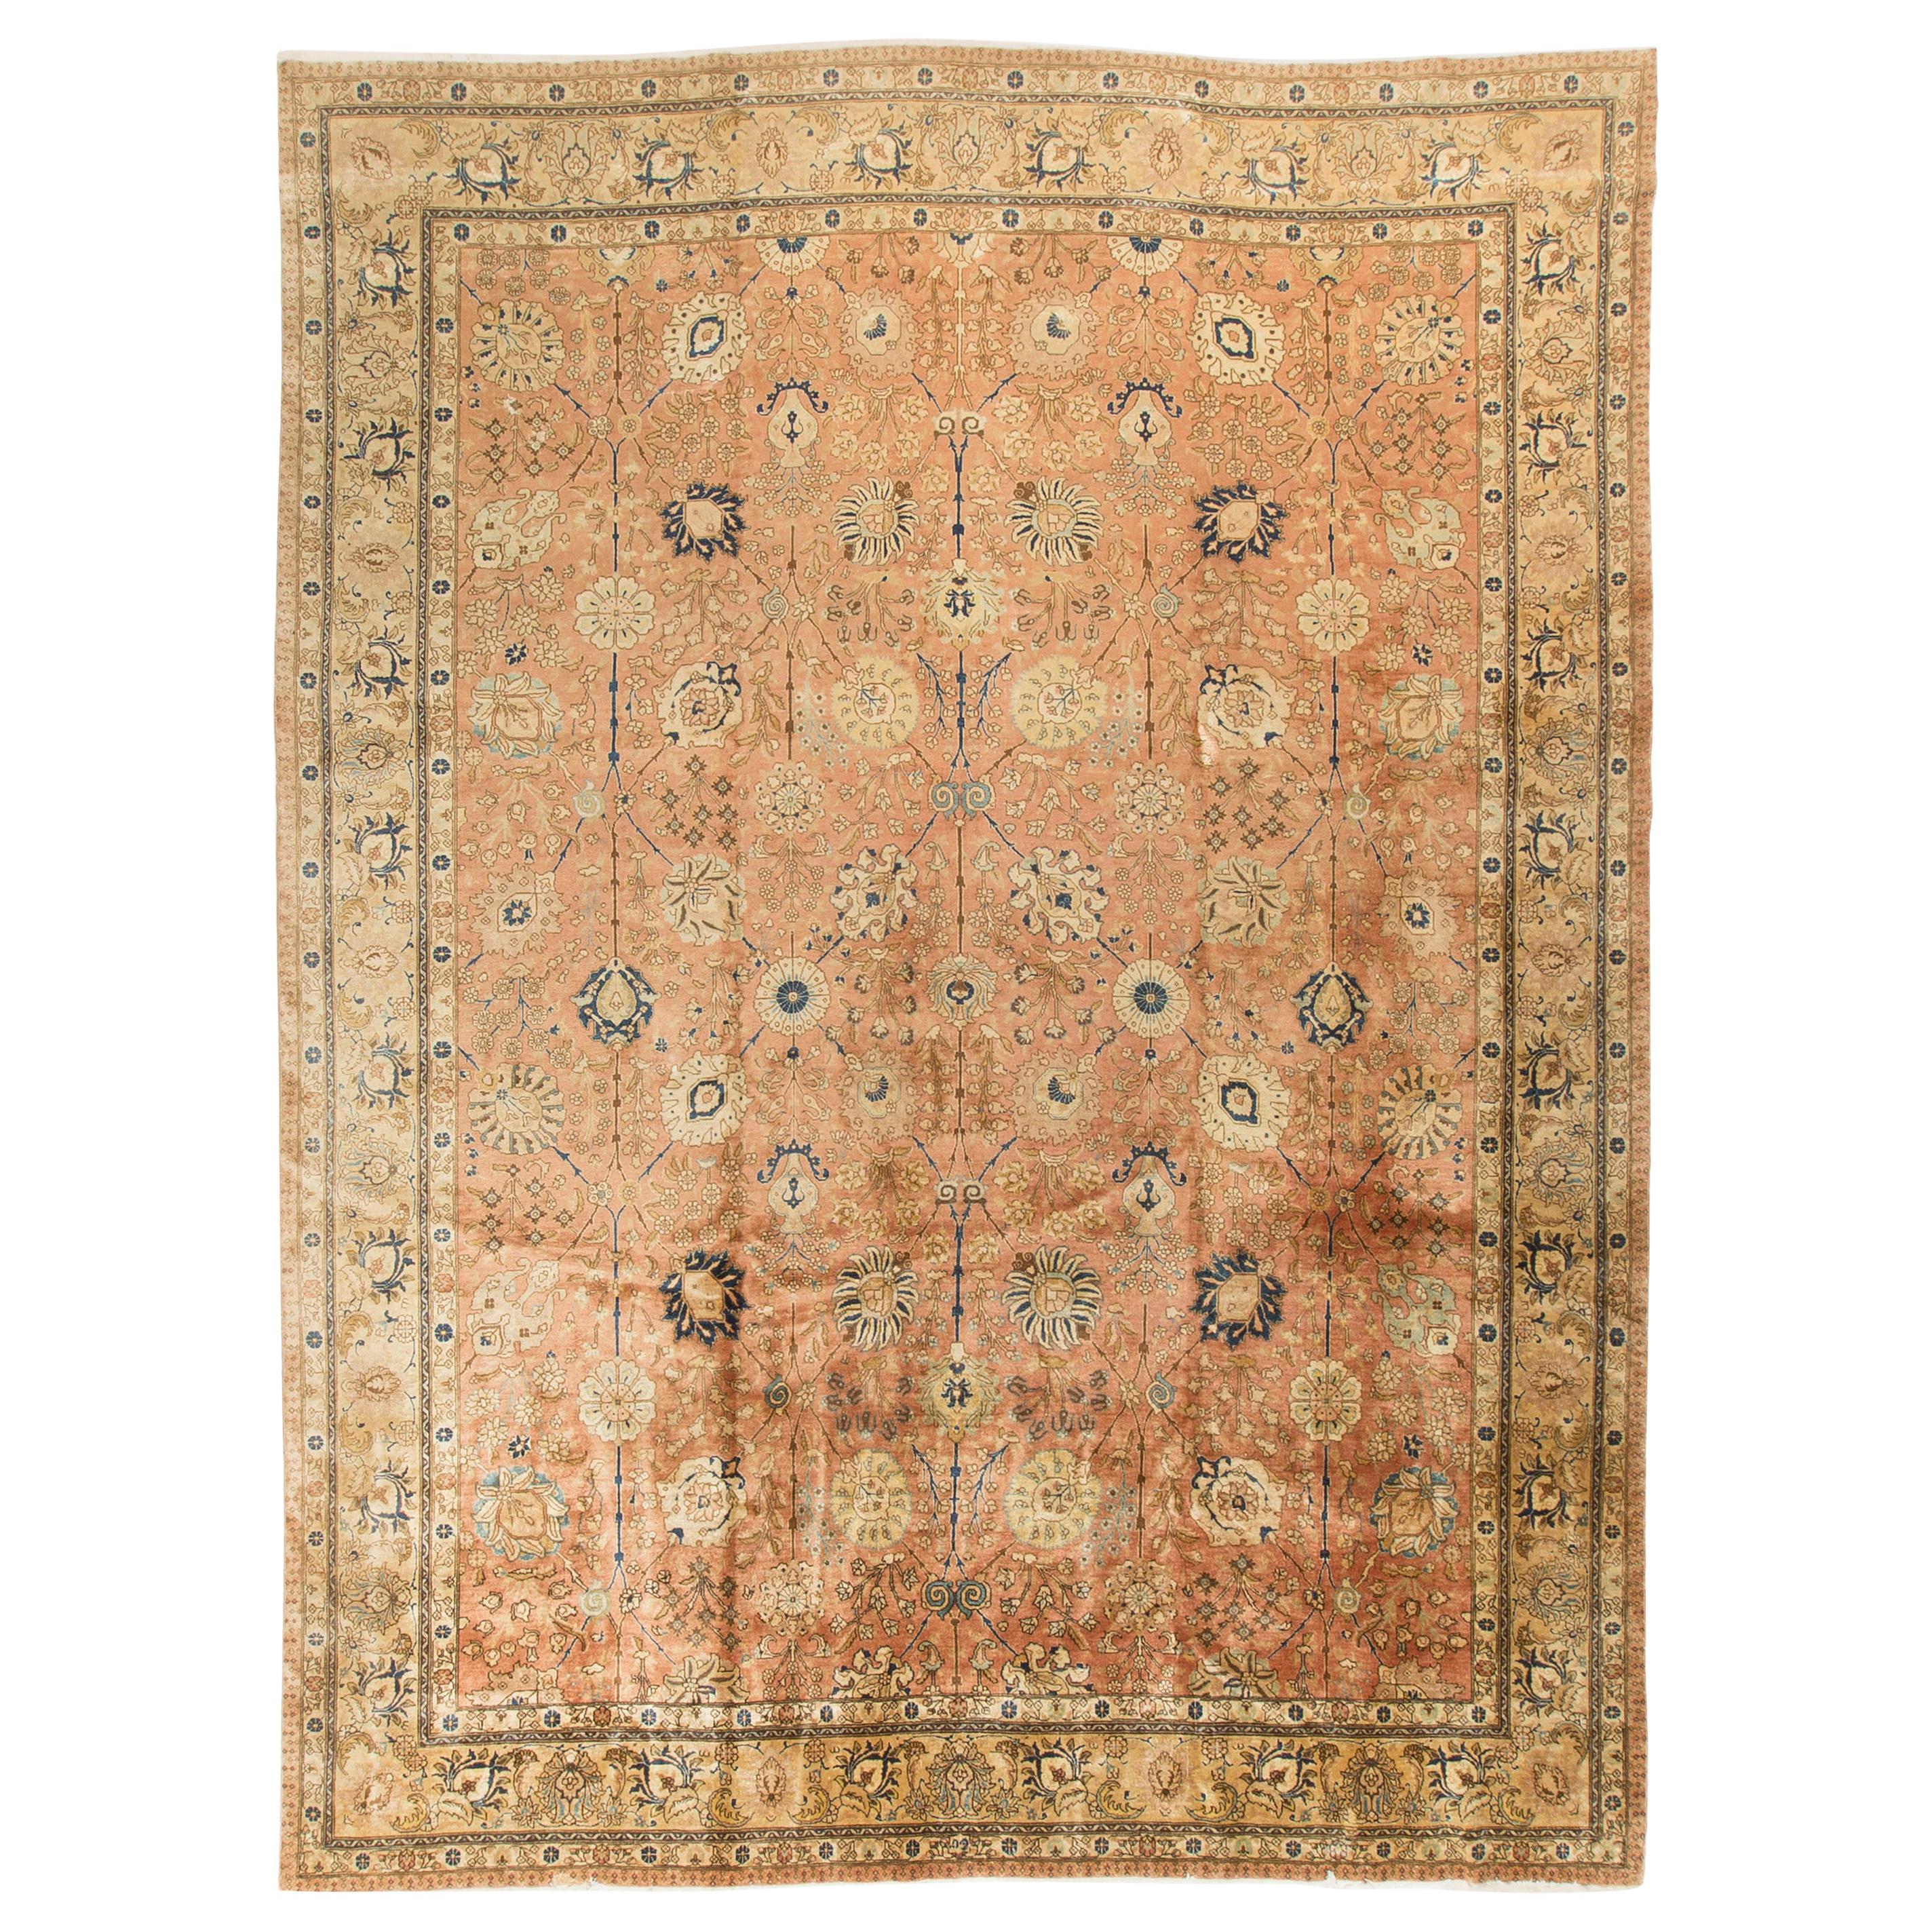 Antique Persian Tabriz Rug Carpet